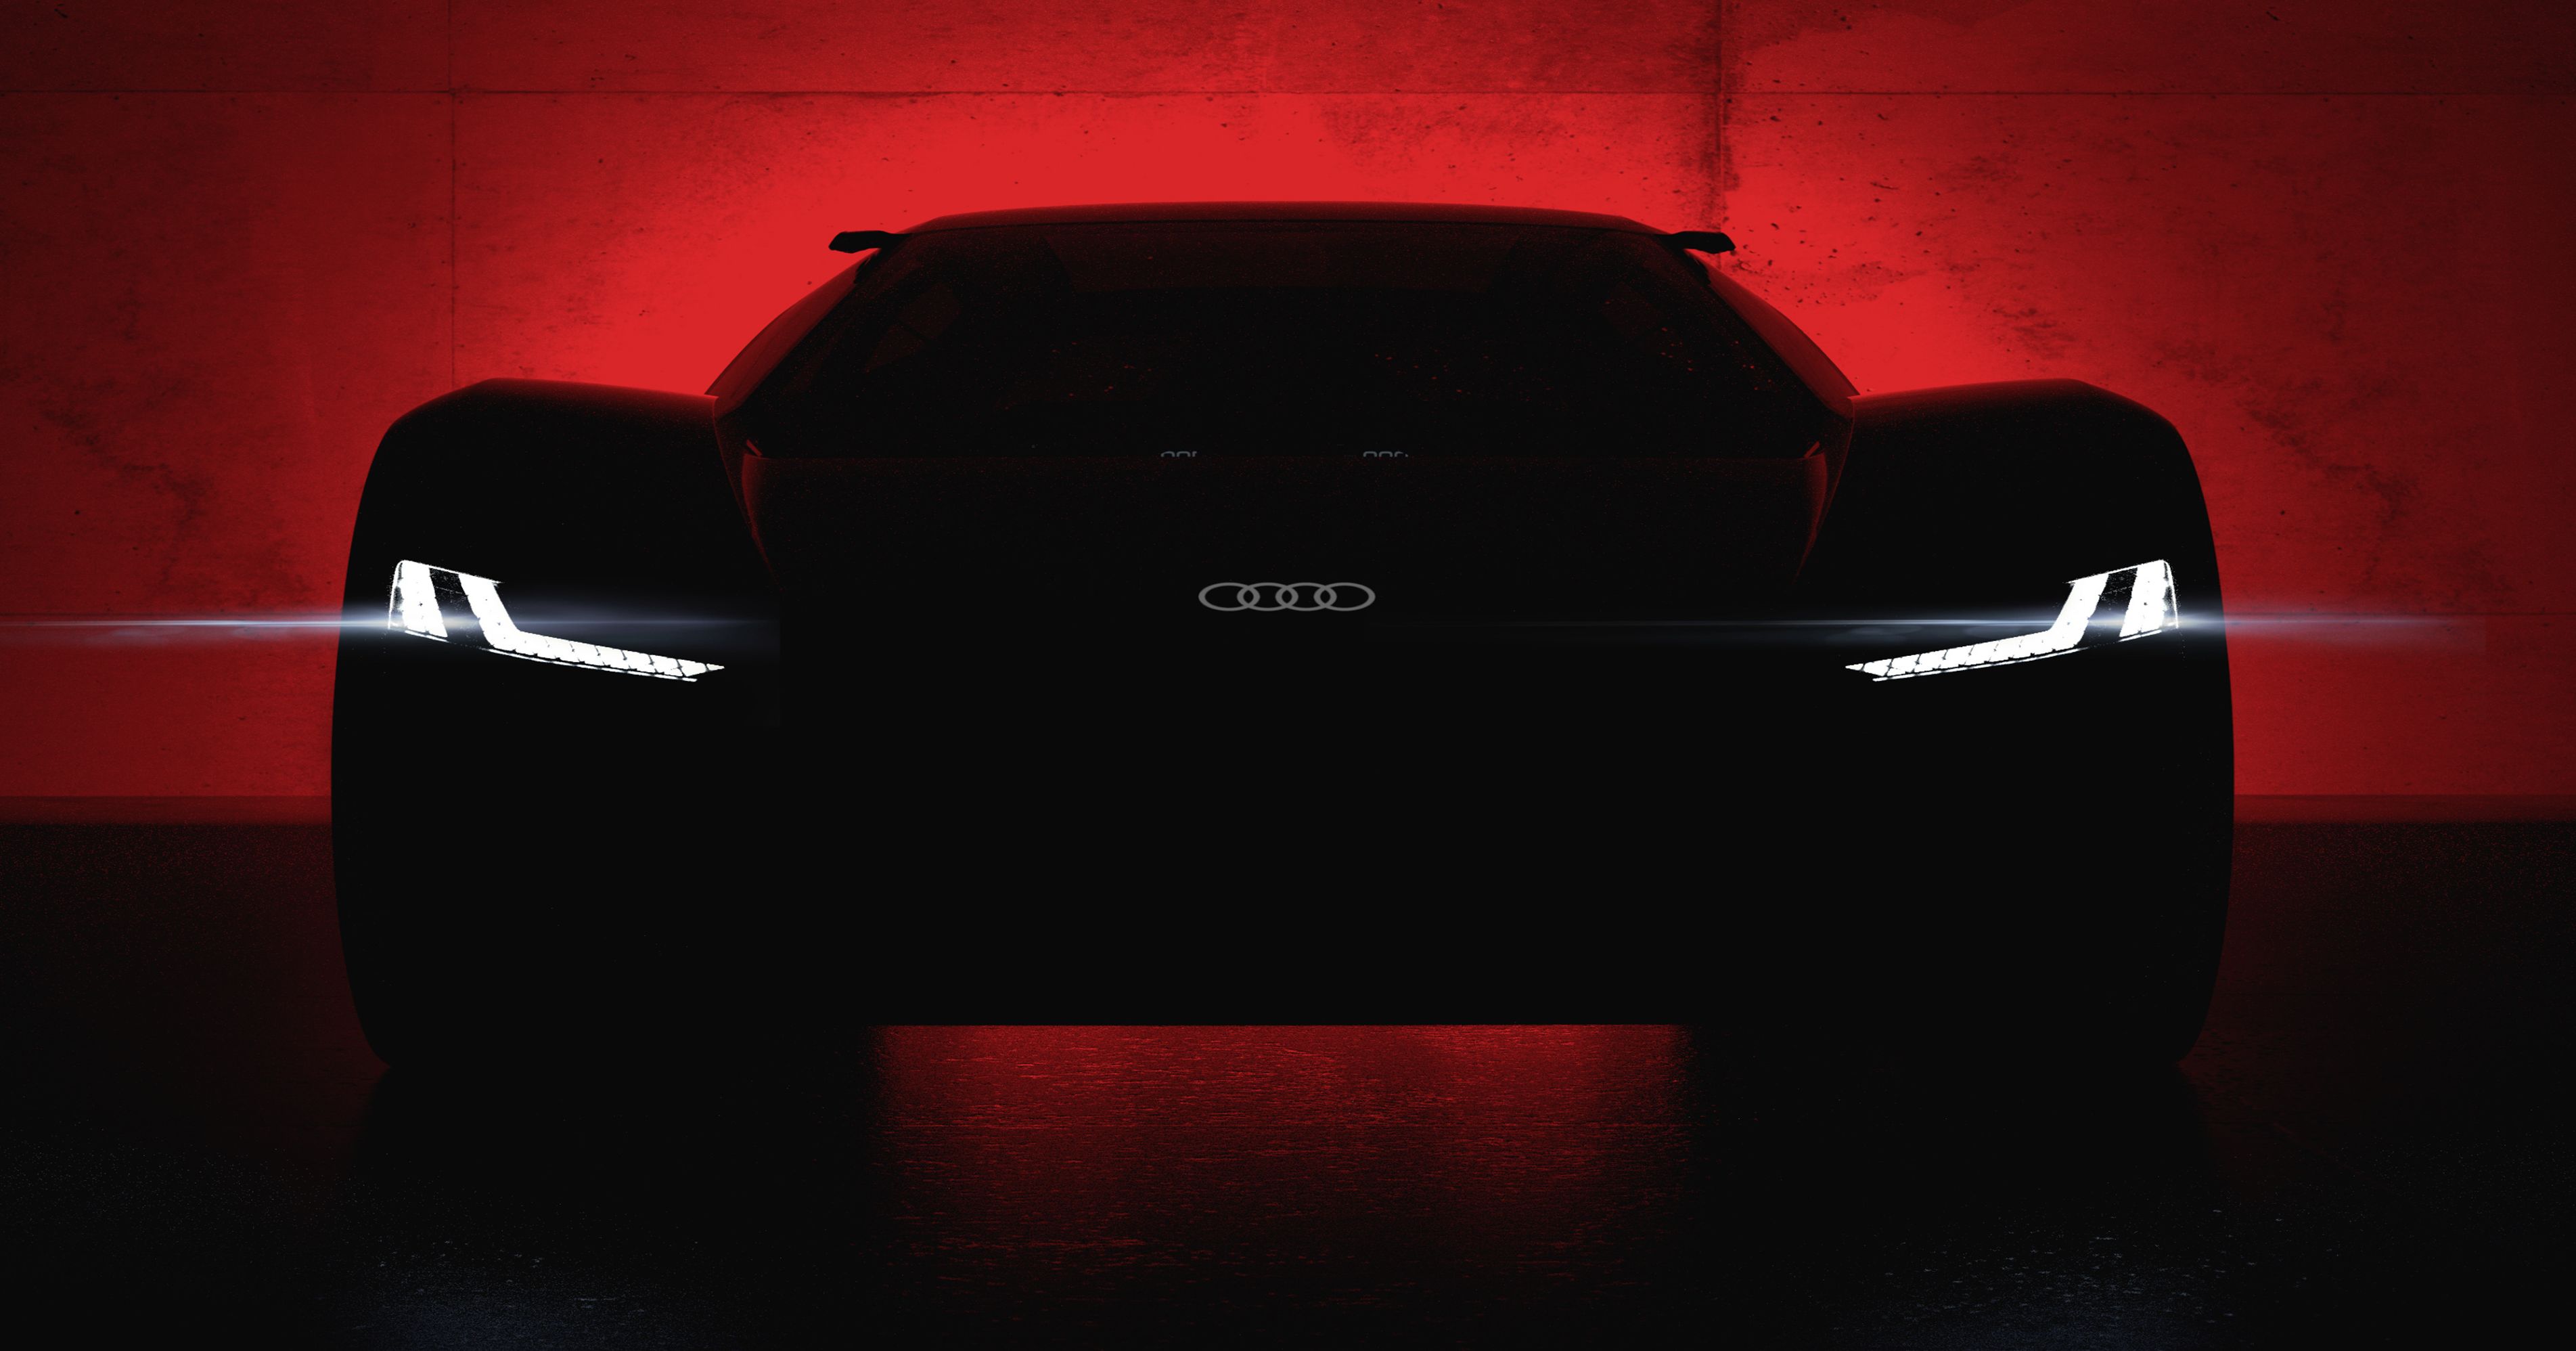 Audi PB18 e-tron concept to debut at Pebble Beach